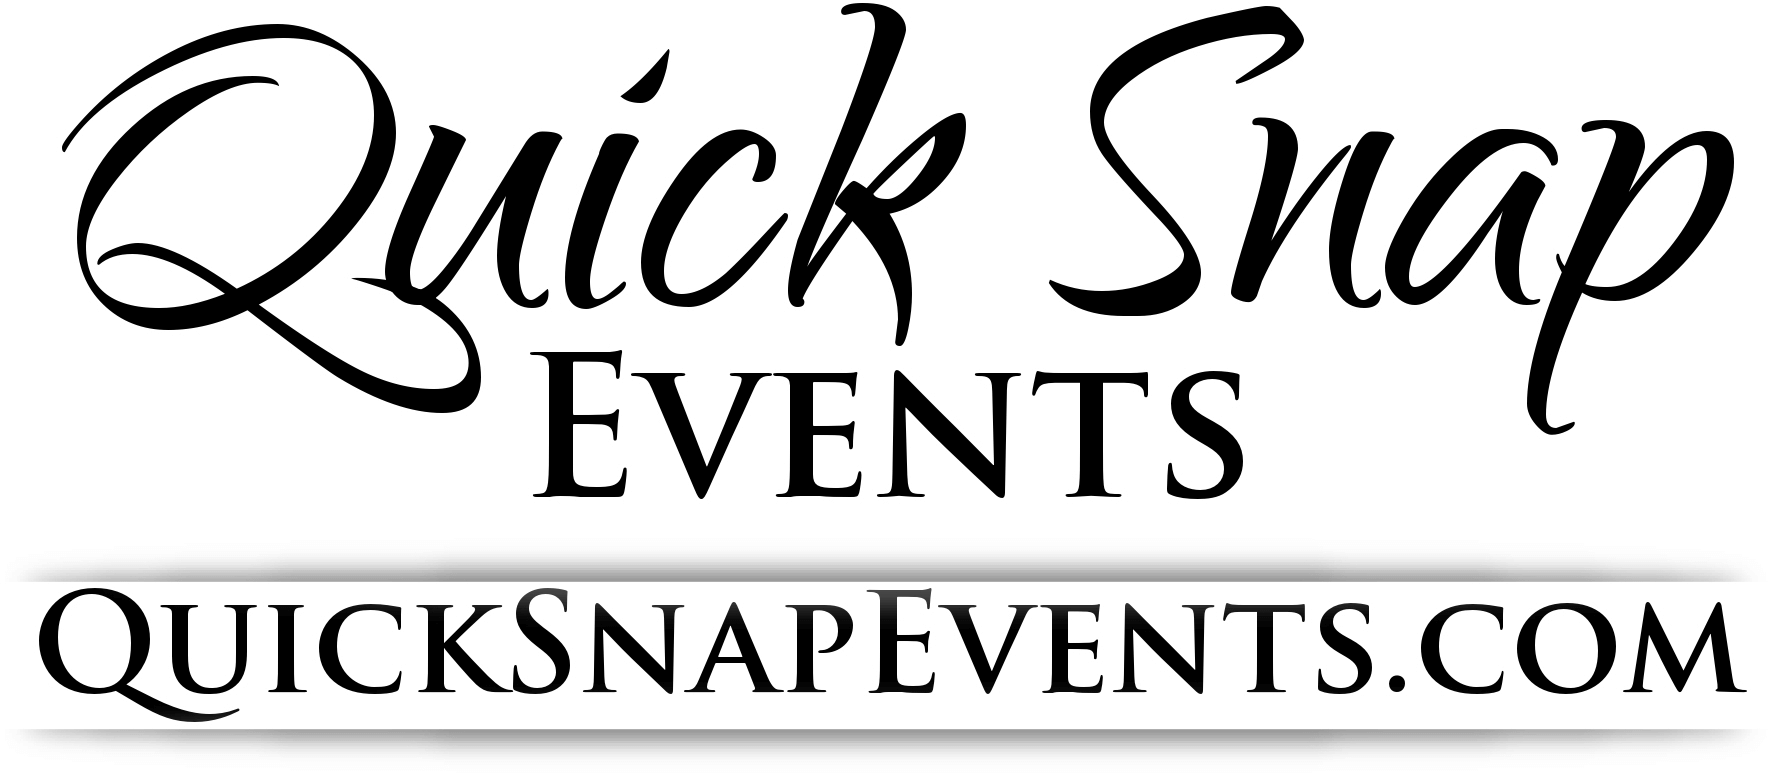 Quick Snap Events